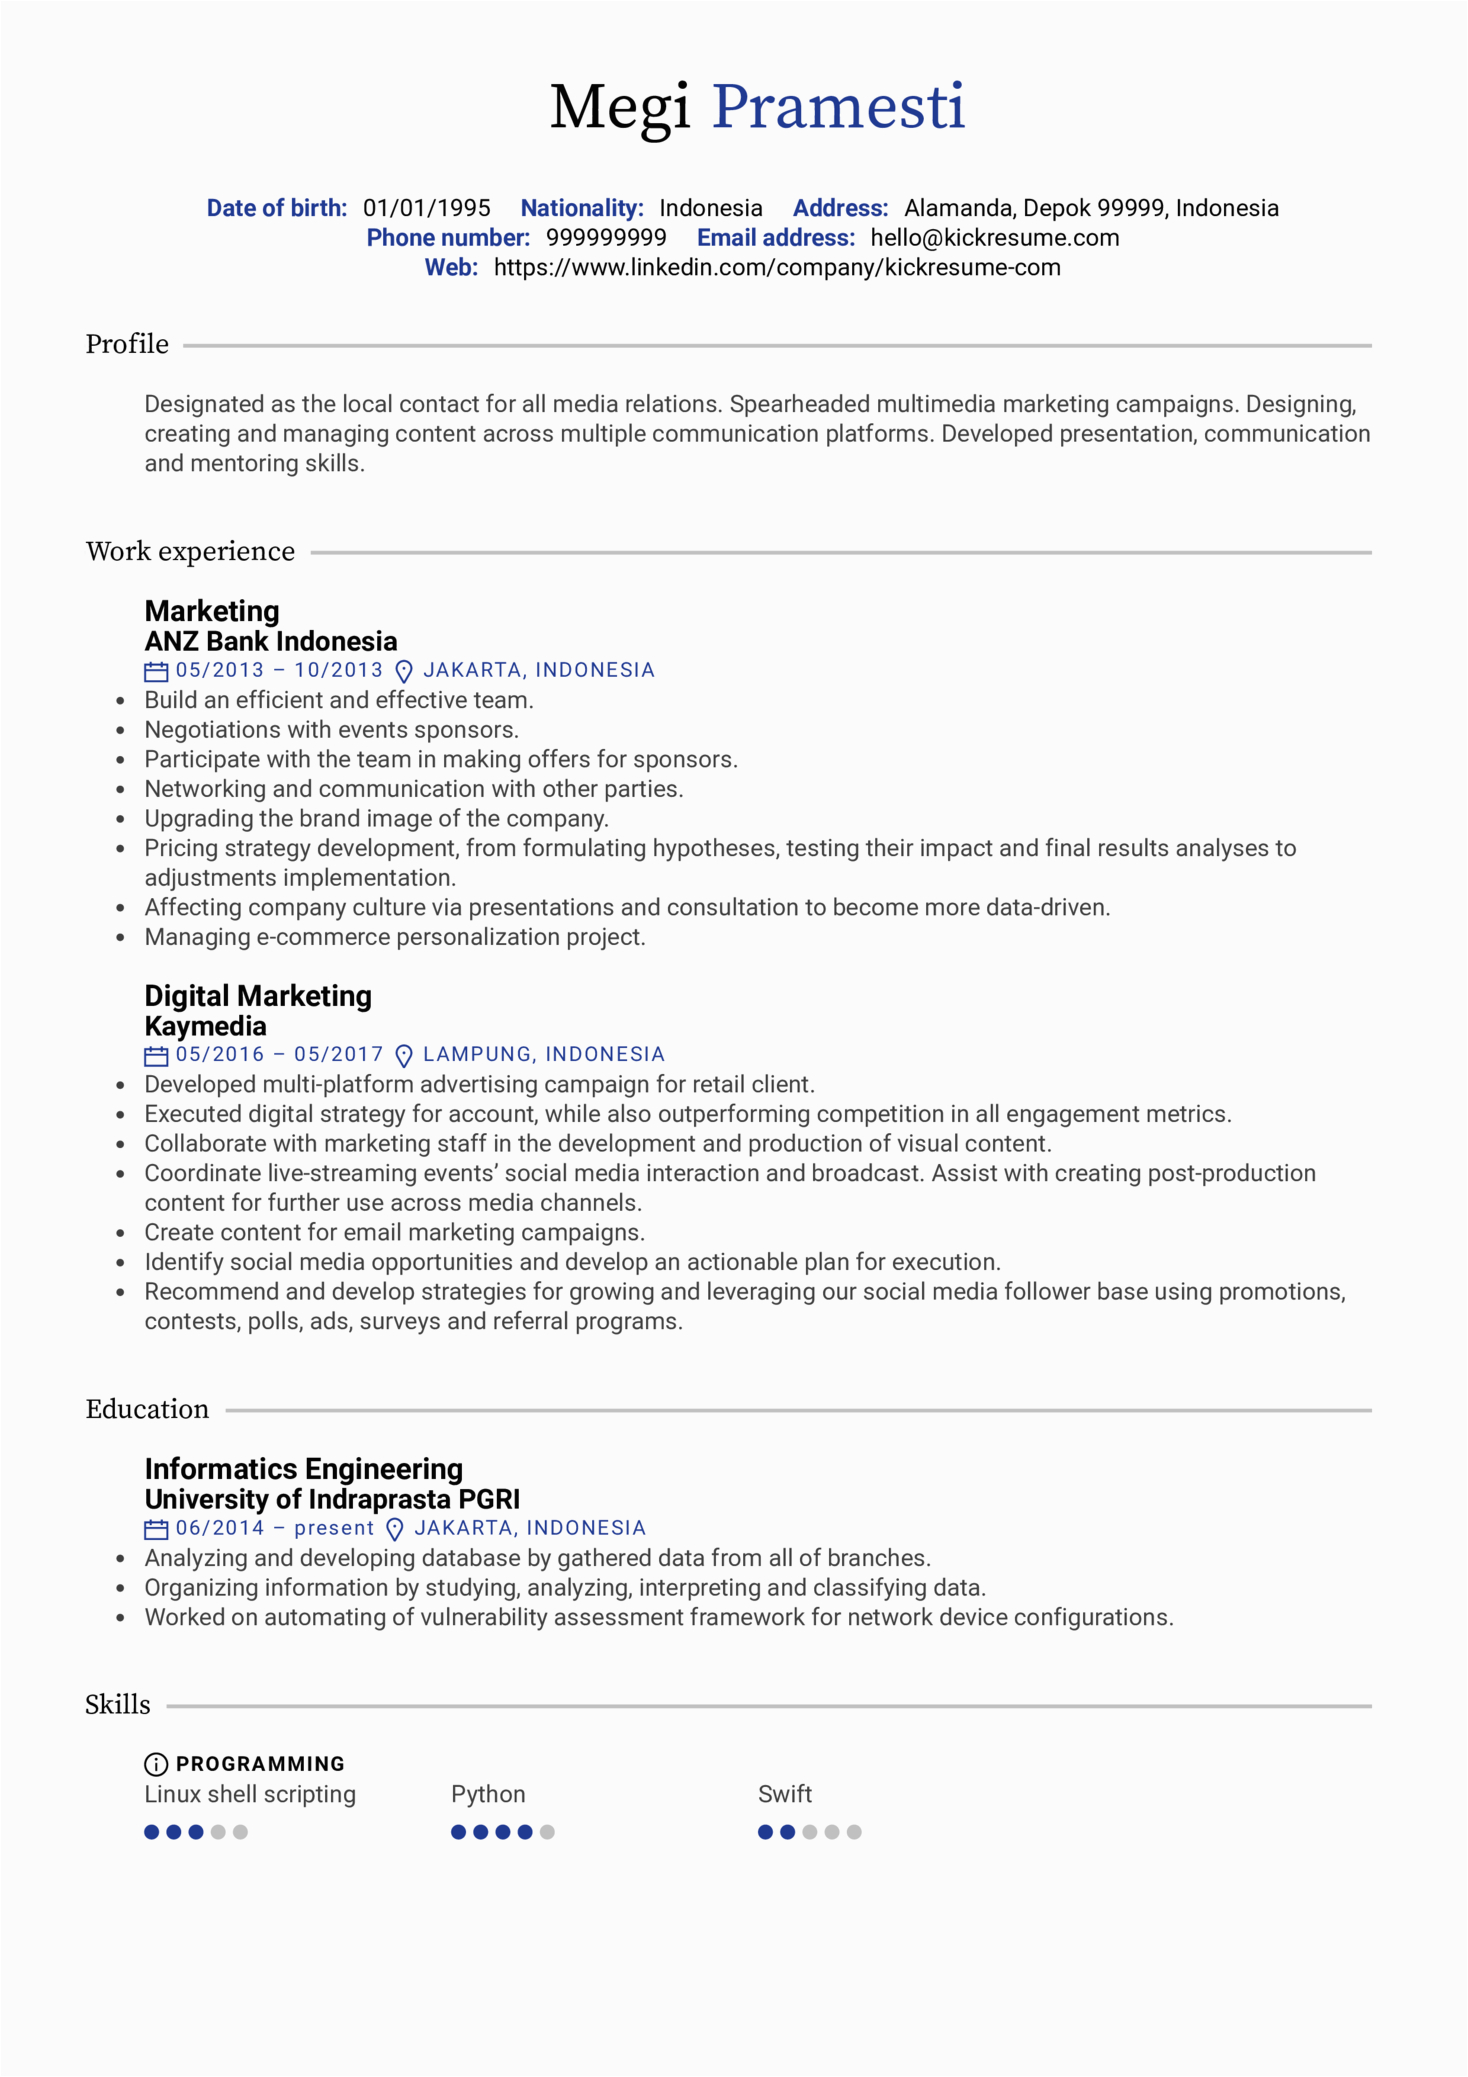 Digital Marketing Resume Sample for Experienced Digital Marketing Resume Sample